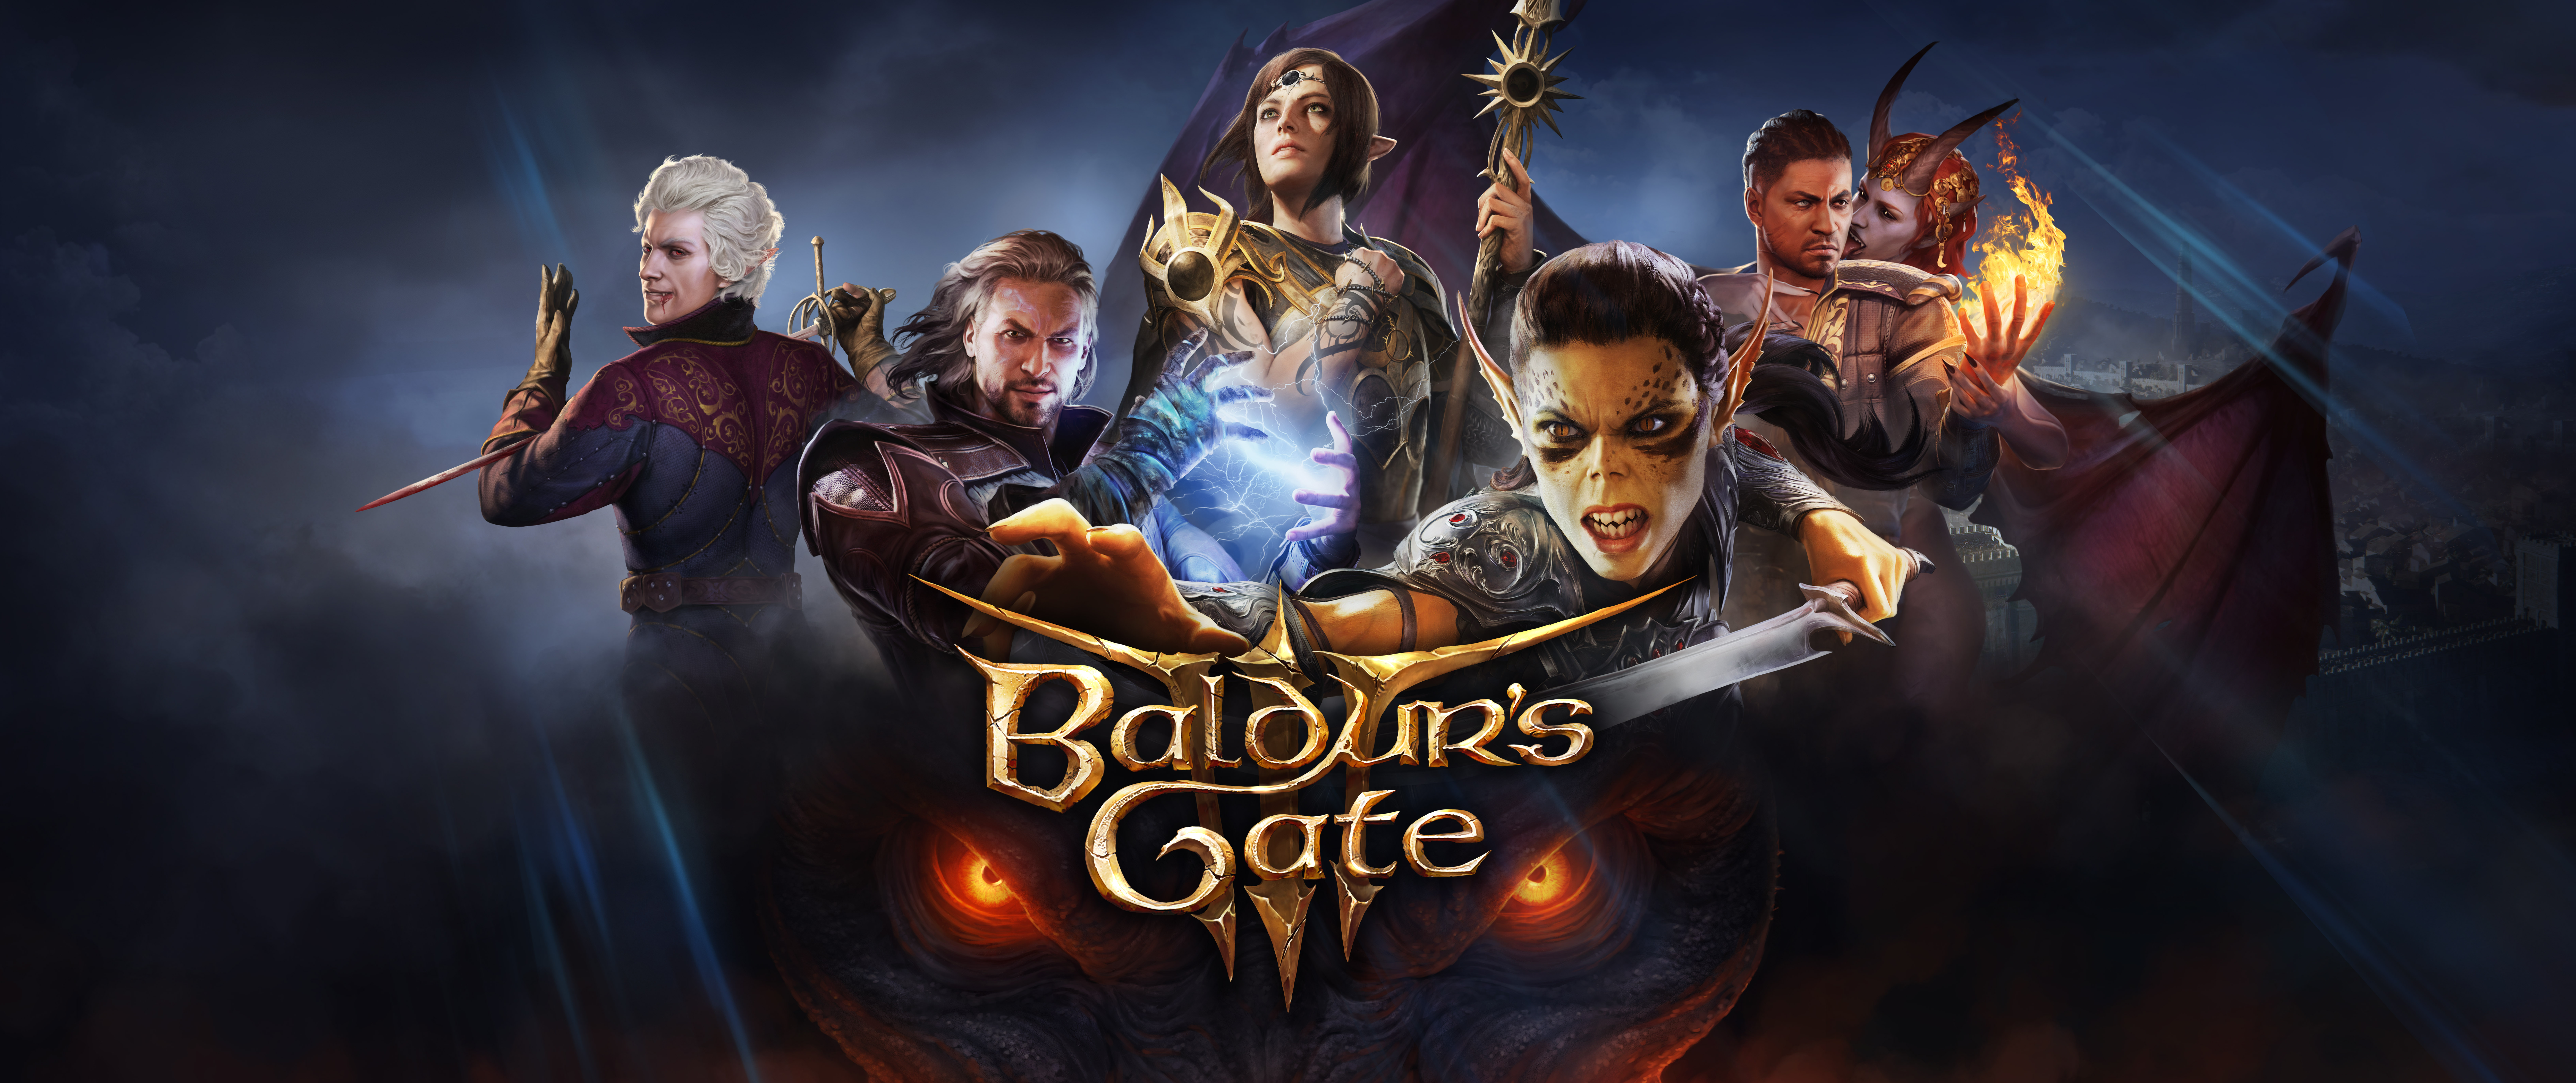 Baldur's Gate 3 HD Wallpaper and Background